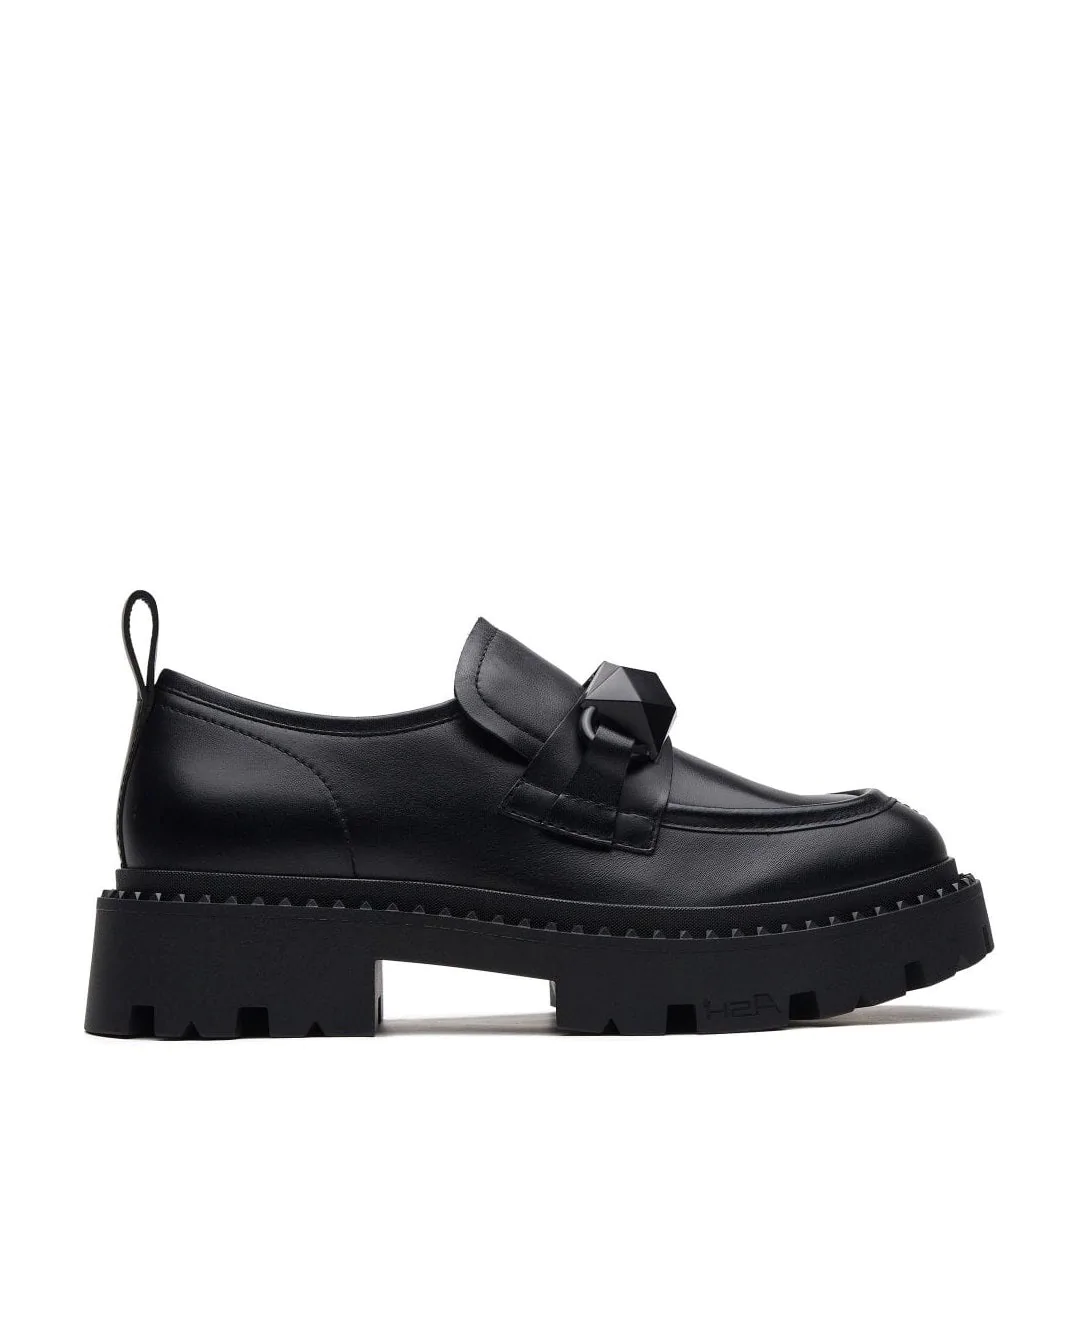 Ash Gemini Black Leather Loafers